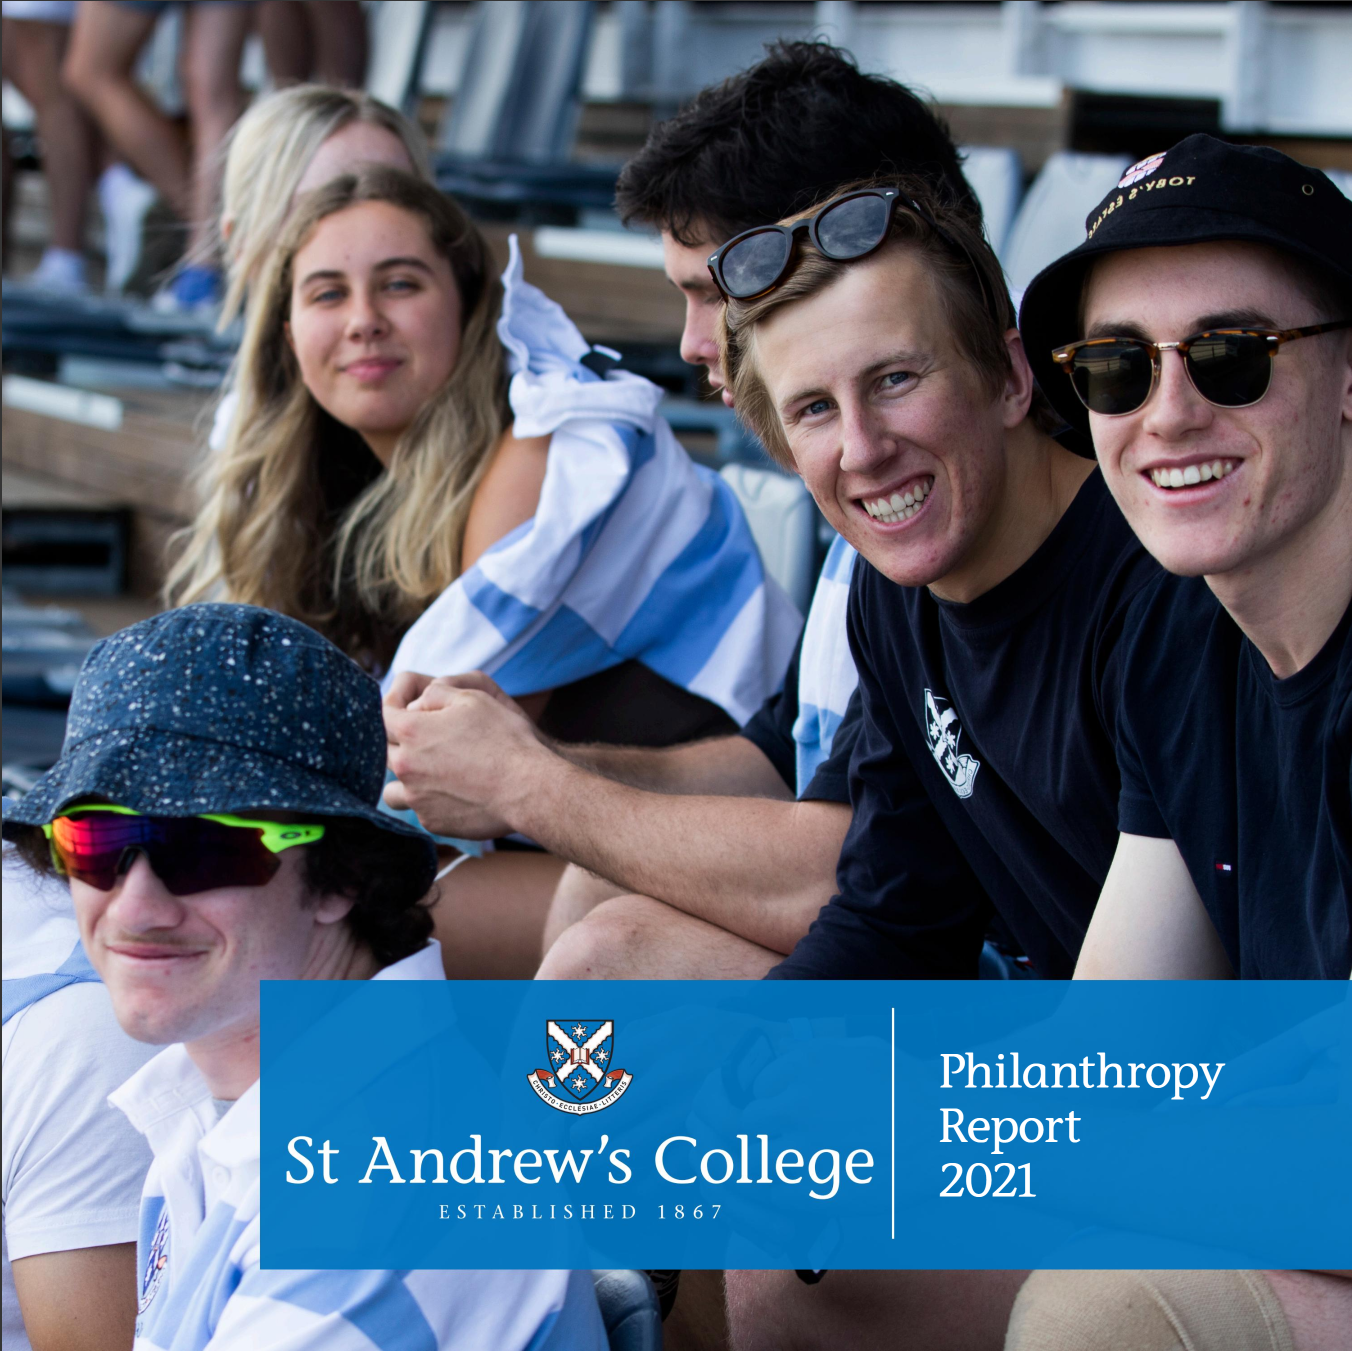 2021 St Andrew's College Philanthropy Report